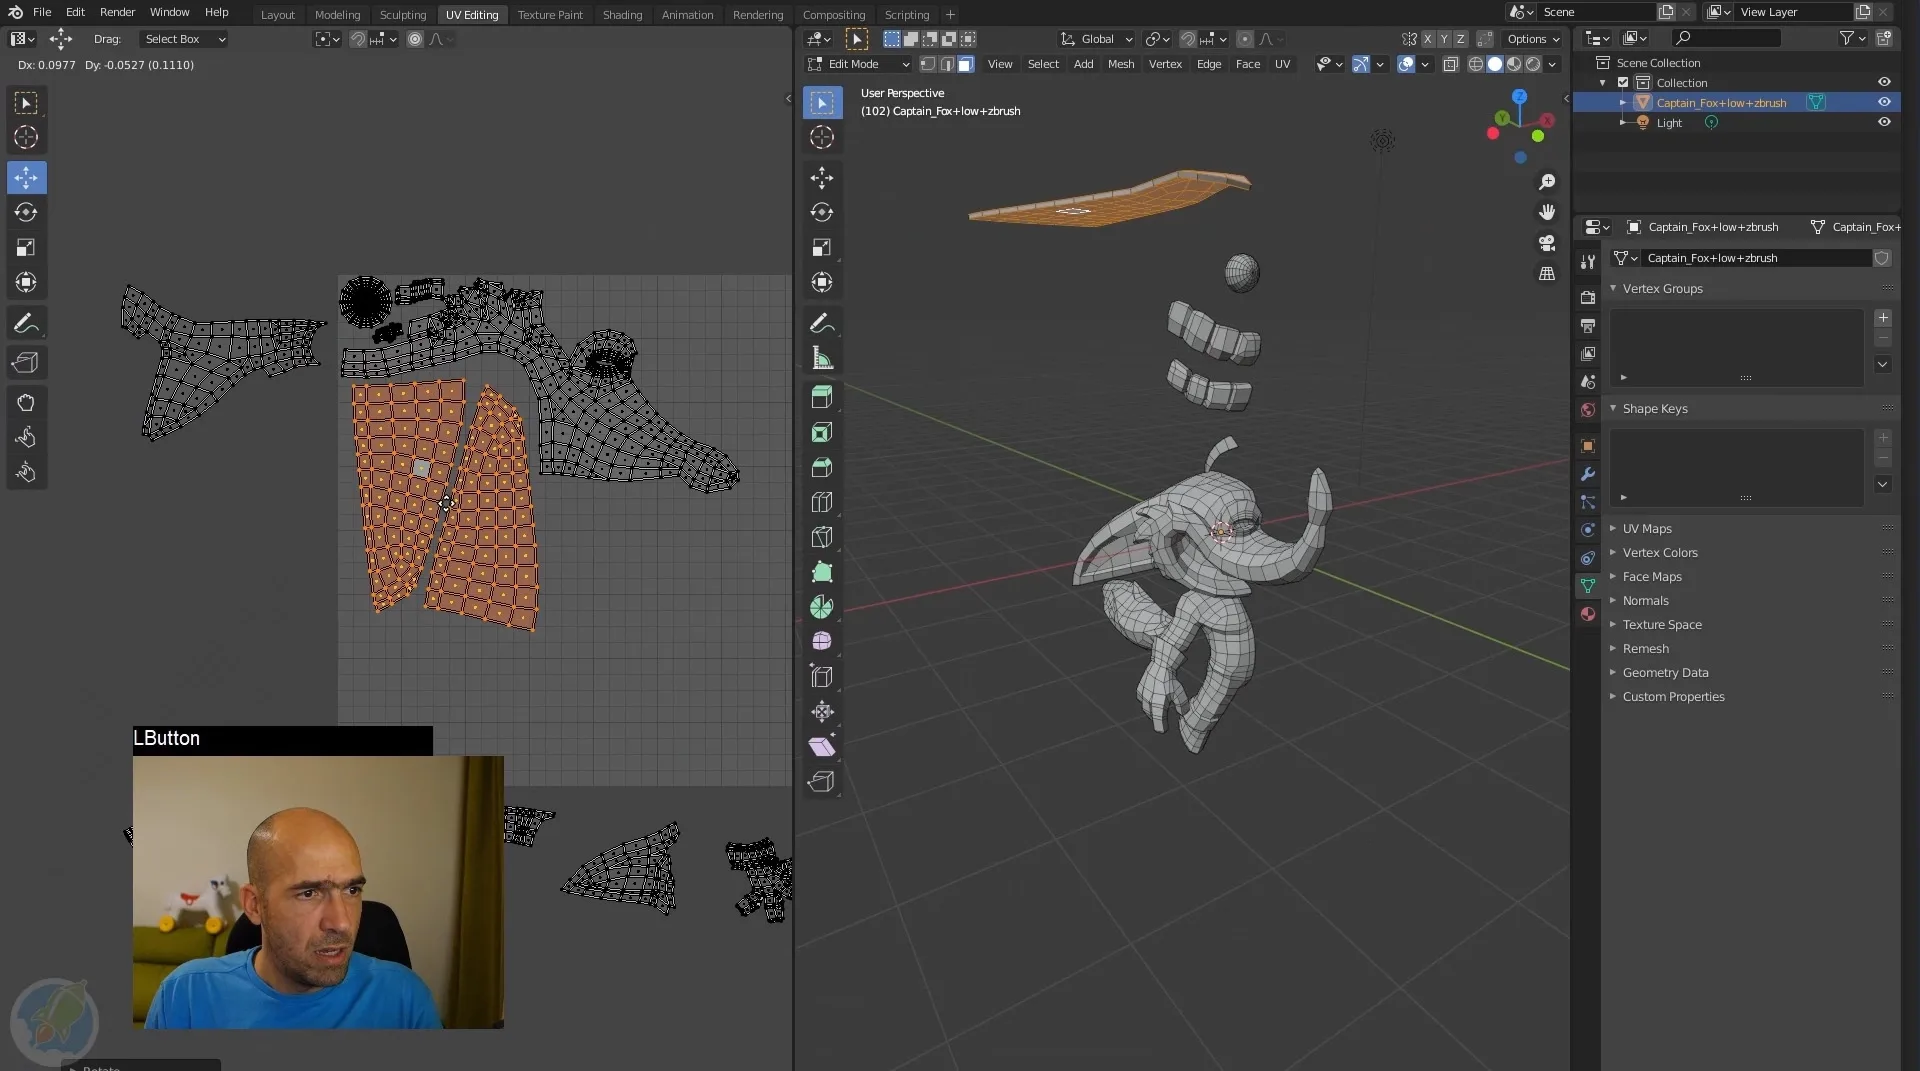 Zbrush-Blender-Substance Painter Full 3D Game Character Tutorial for Absolute Beginners